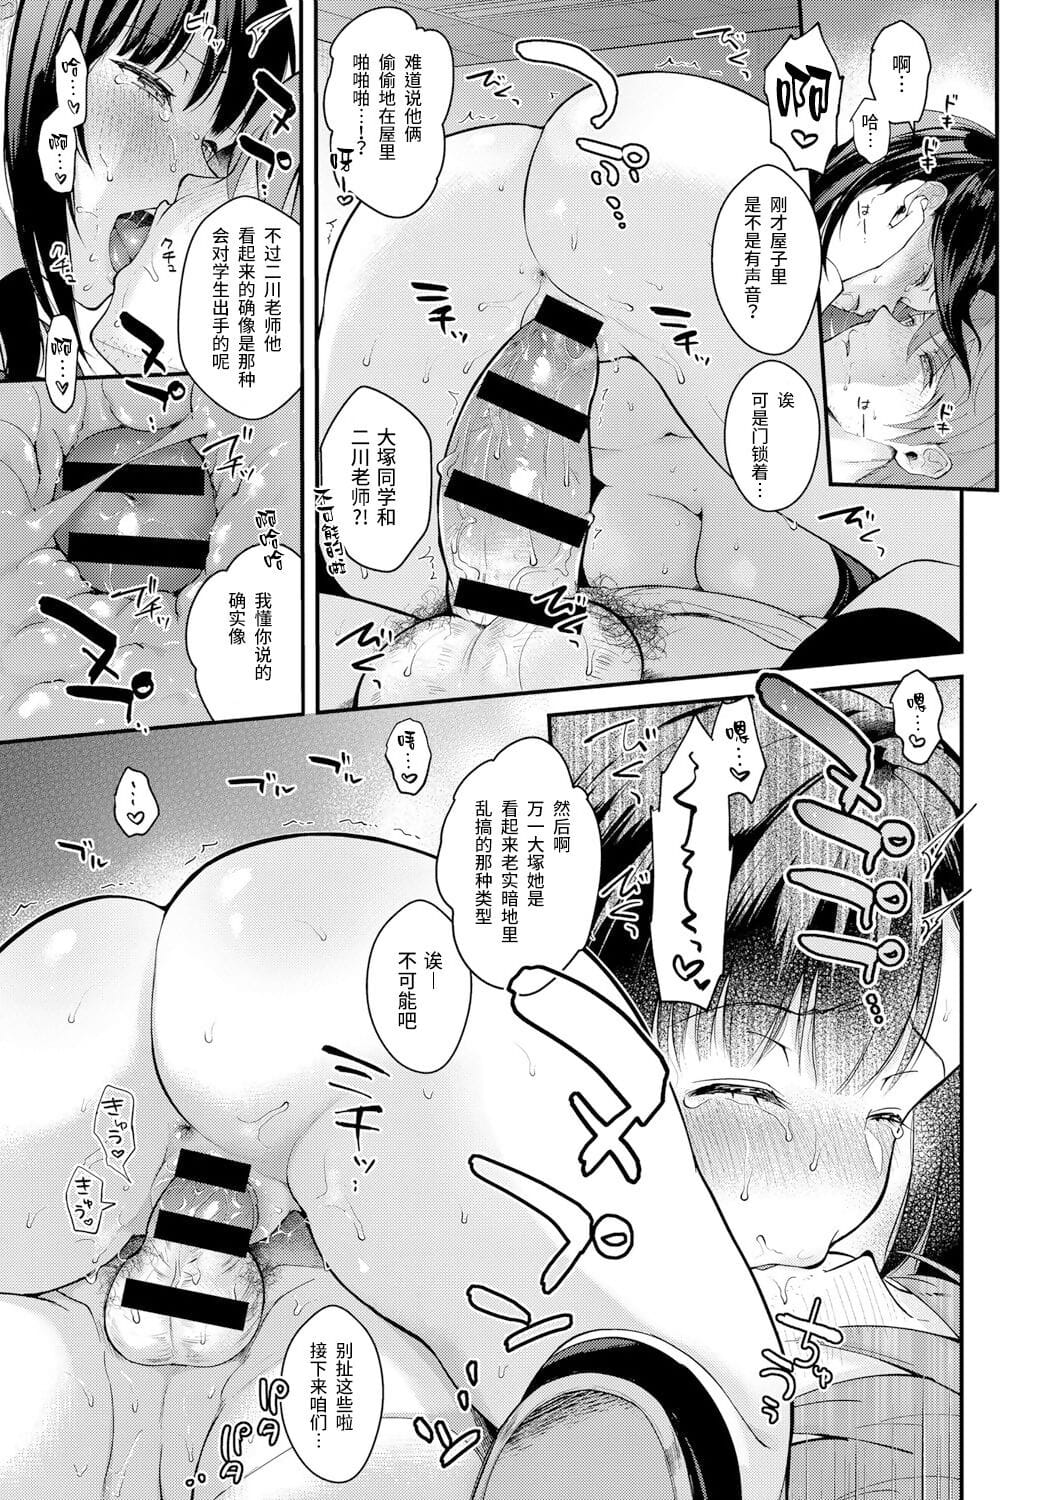 Sangatsu no Ame - Rain of March page 1